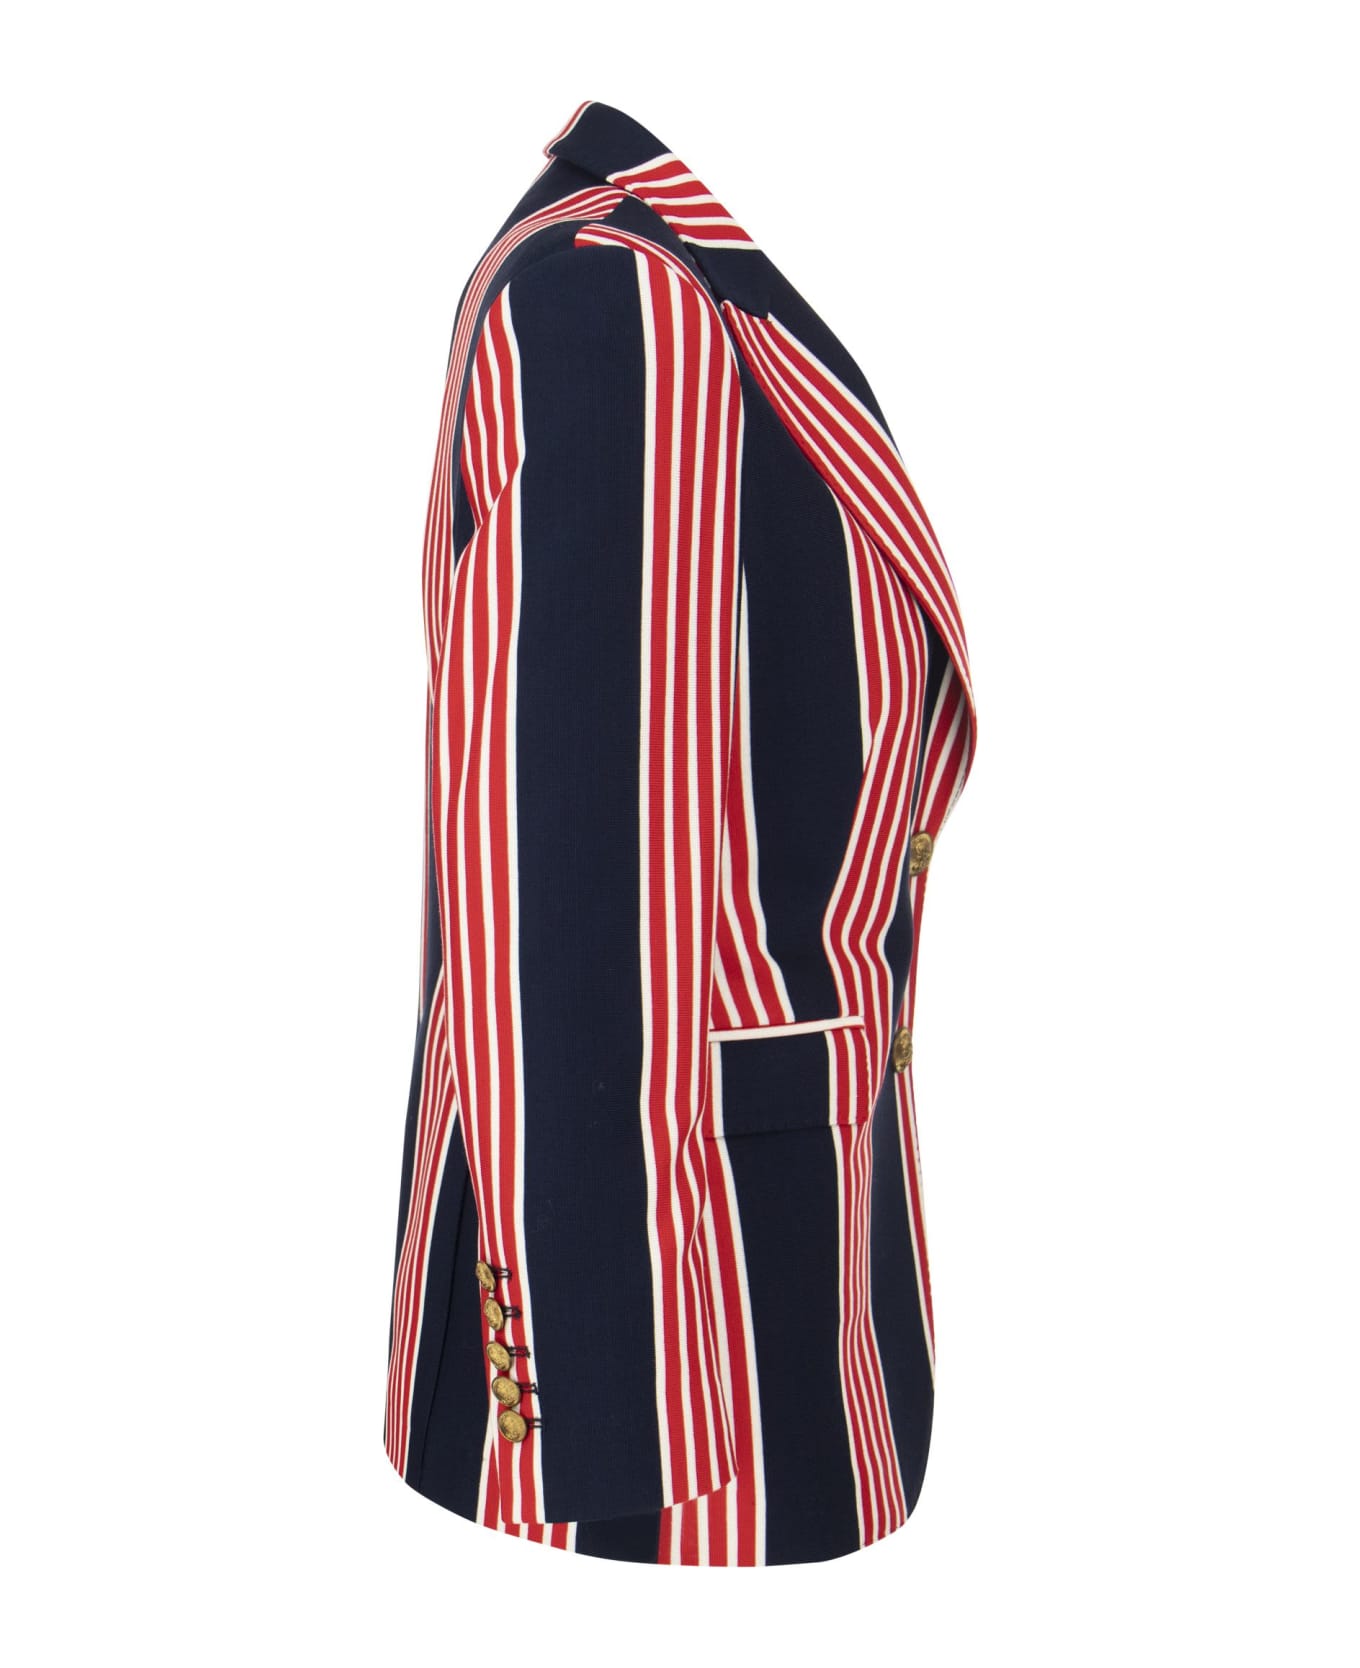 Saulina Milano Angelica - Striped Jacket - Blue/red ブレザー